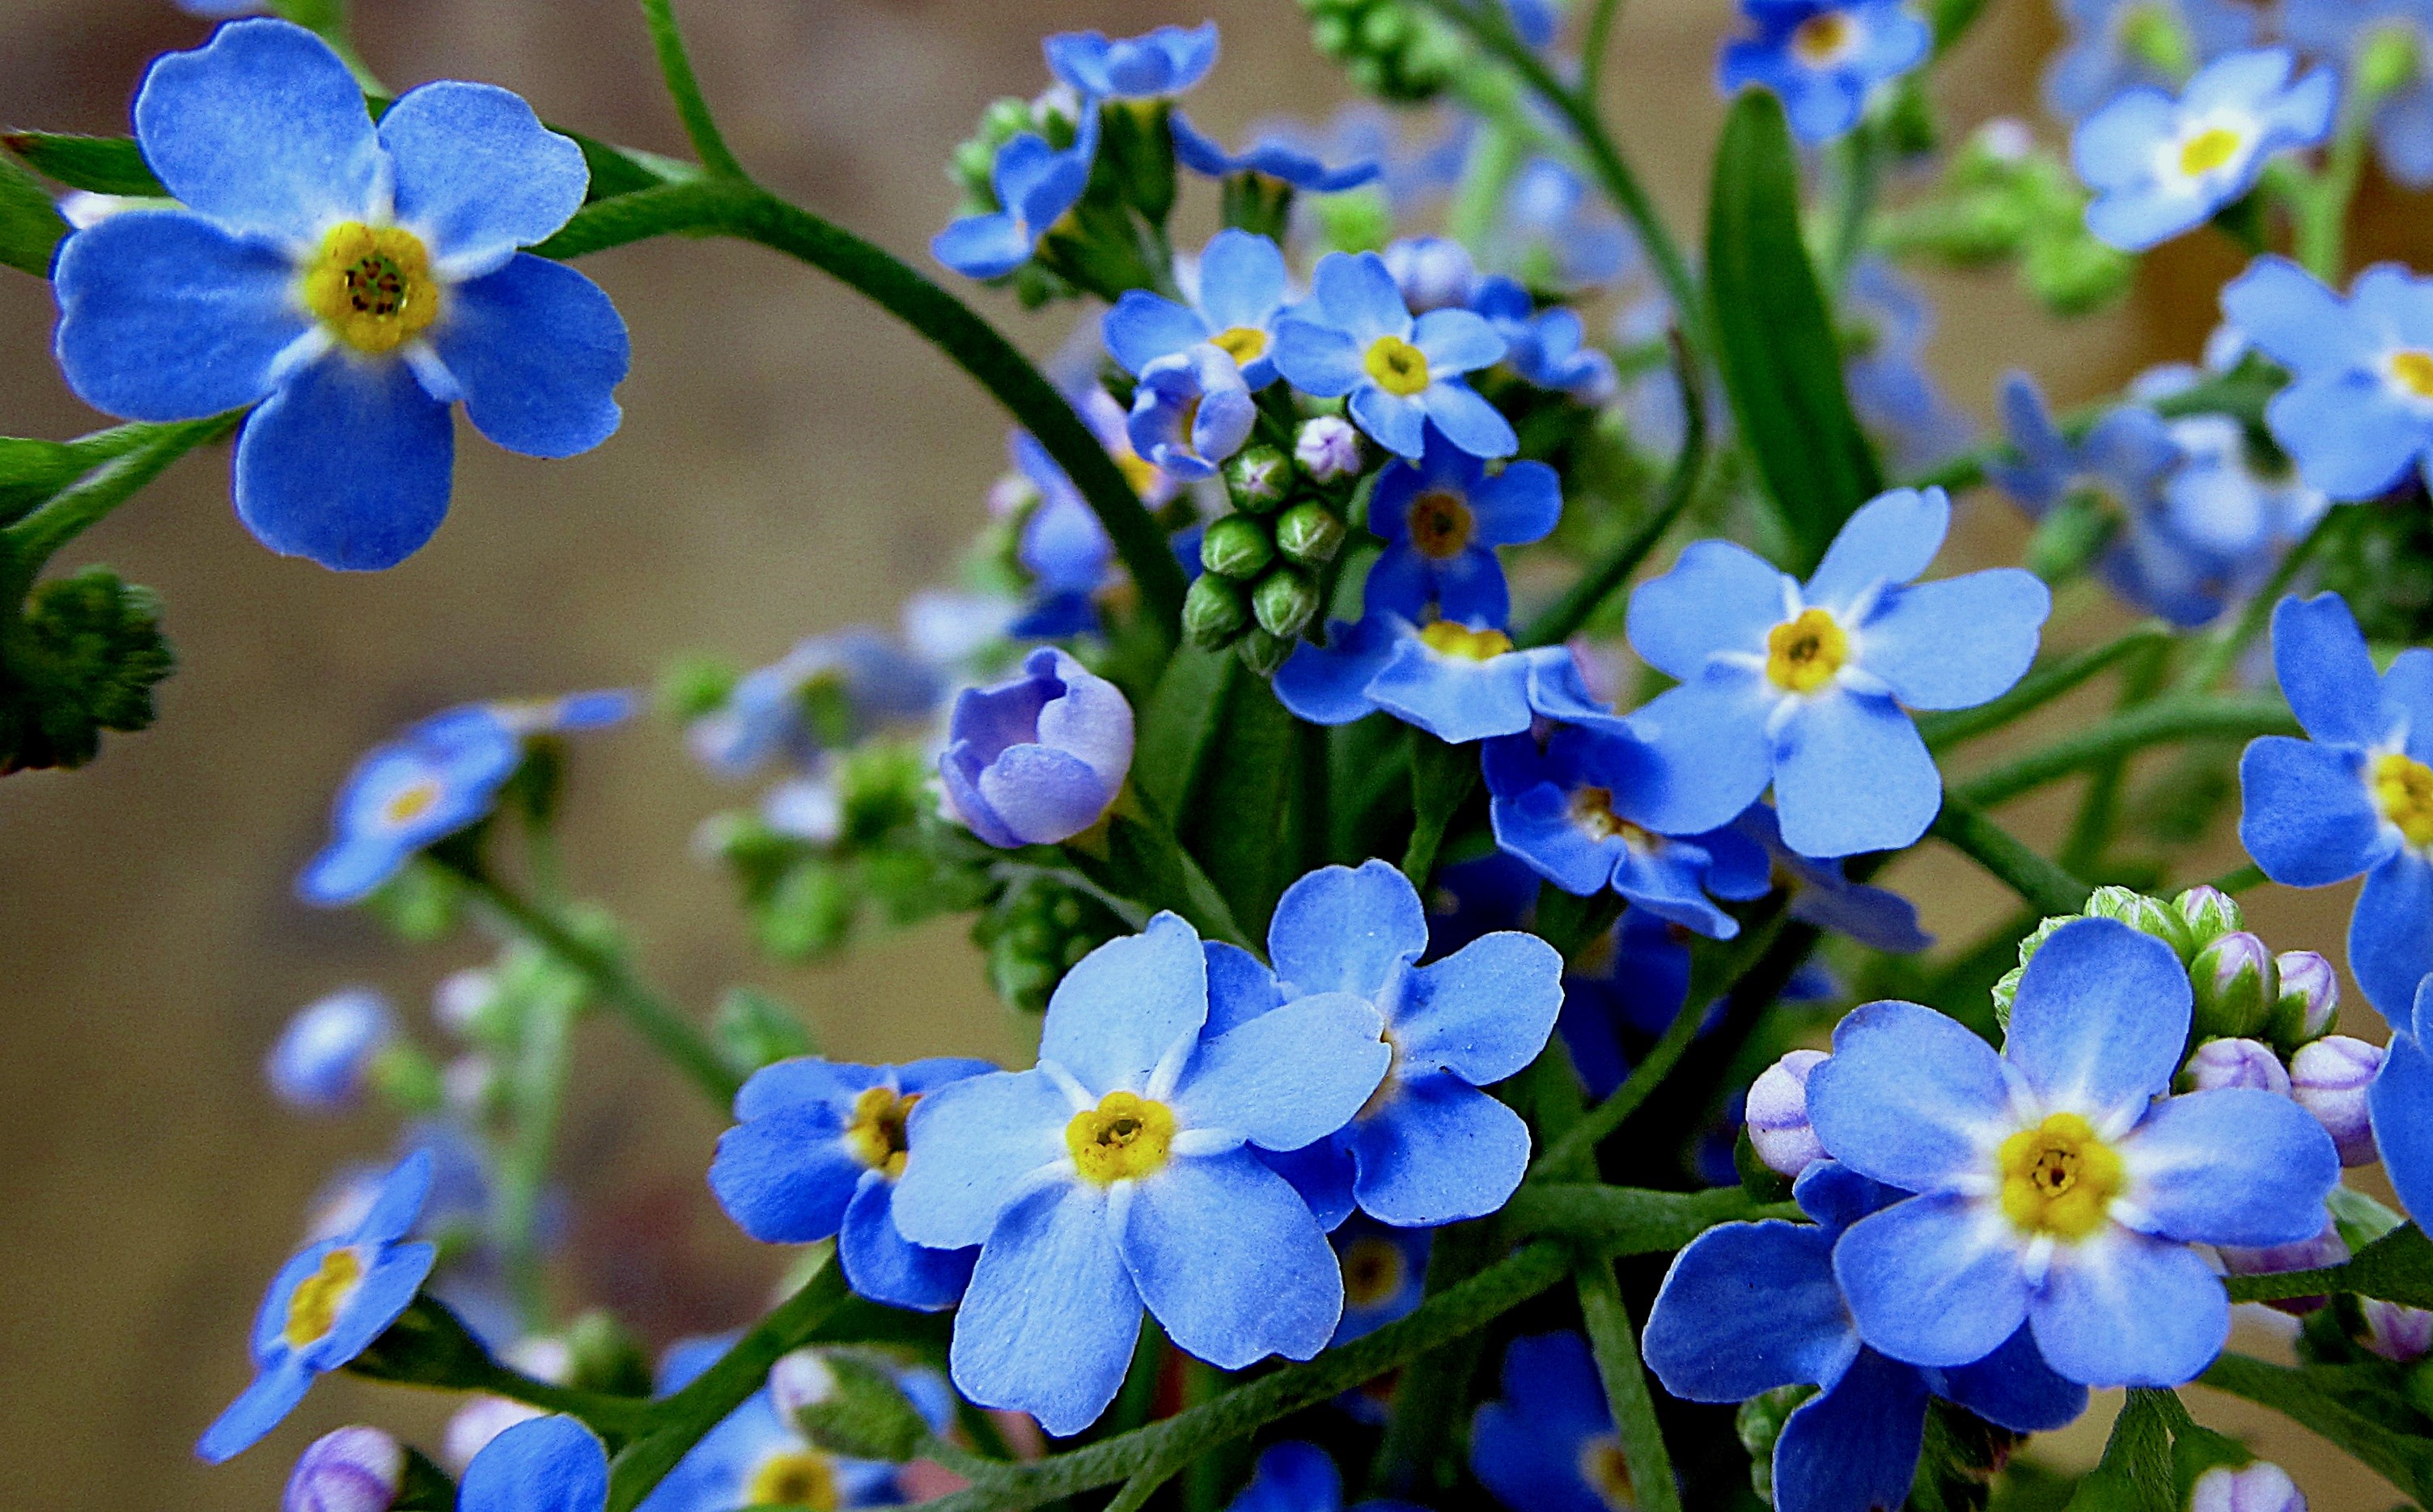 380356 descargar imagen tierra/naturaleza, nomeolvides, flor azul, flor, flores: fondos de pantalla y protectores de pantalla gratis